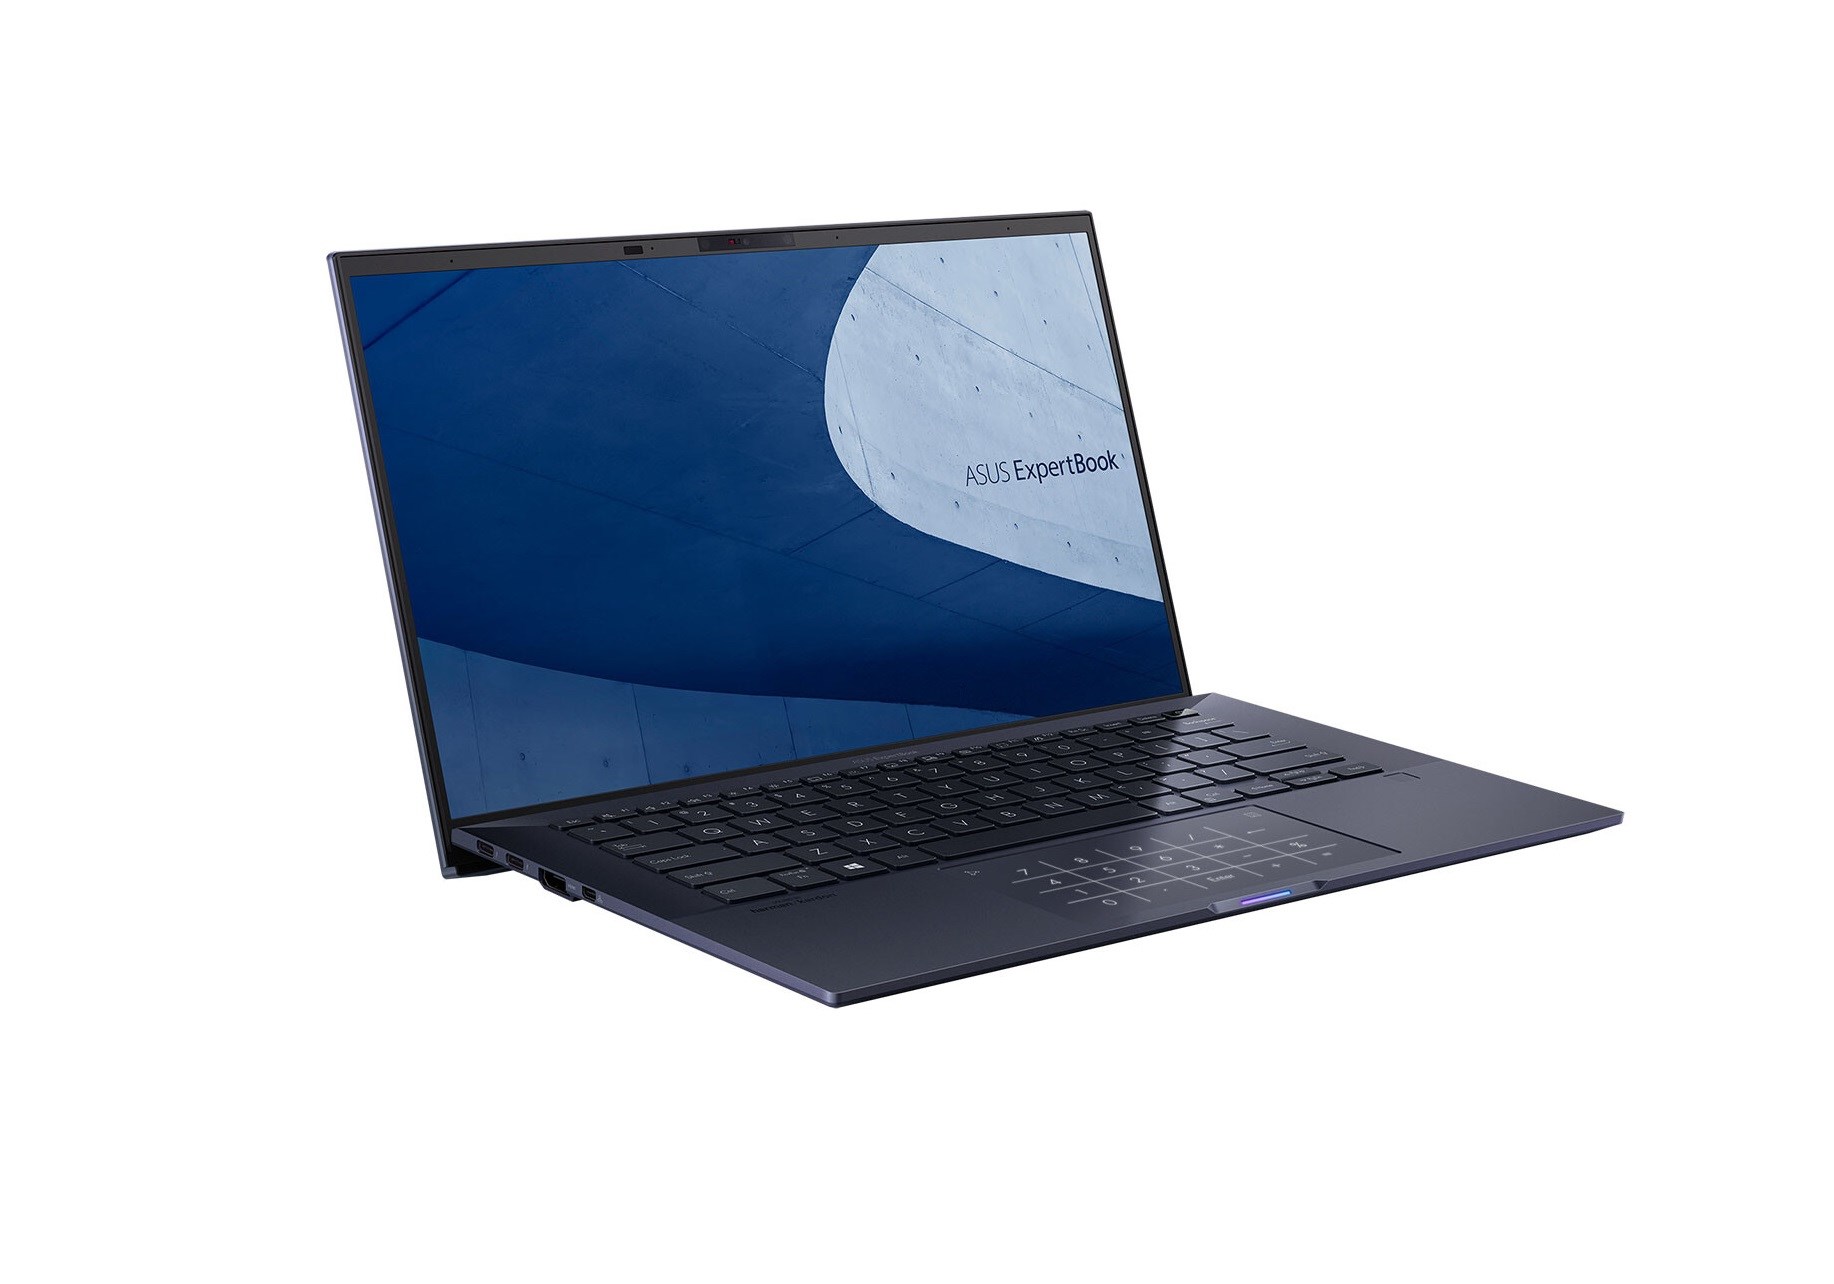 Asus yeni Intel Xe grafikli ExpertBook B9 modelini tanıttı